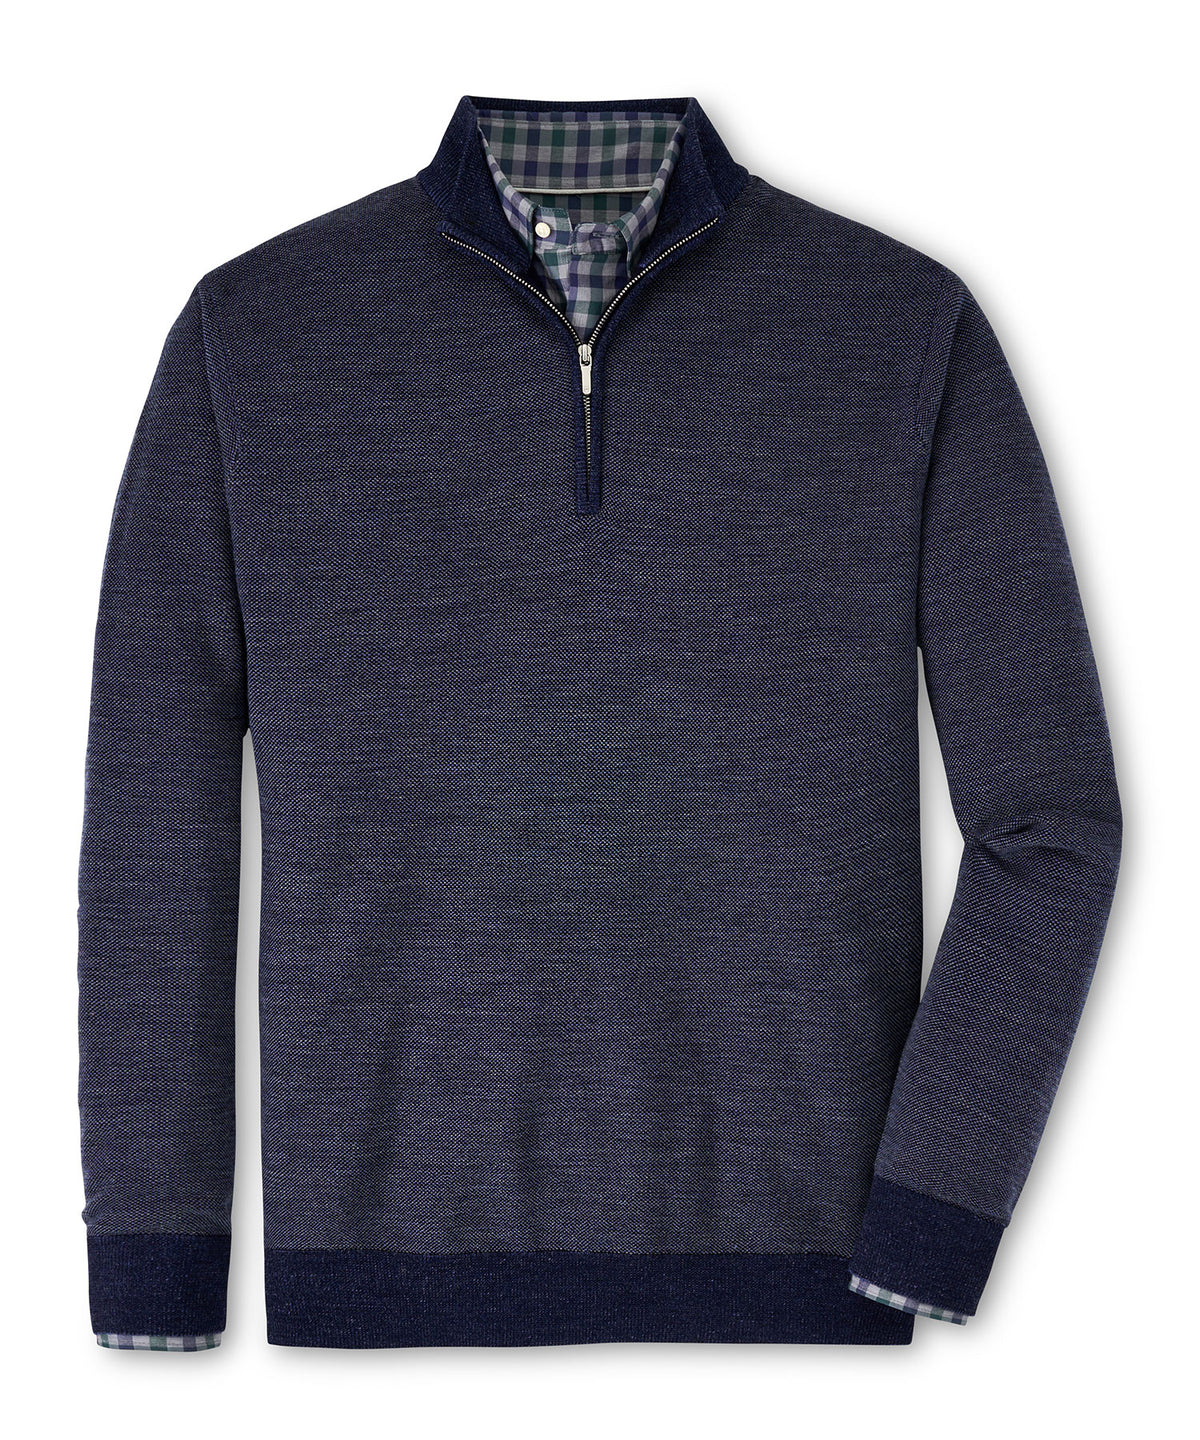 Peter Millar Breaker Birdseye Quarter-Zip Sweater, Big & Tall